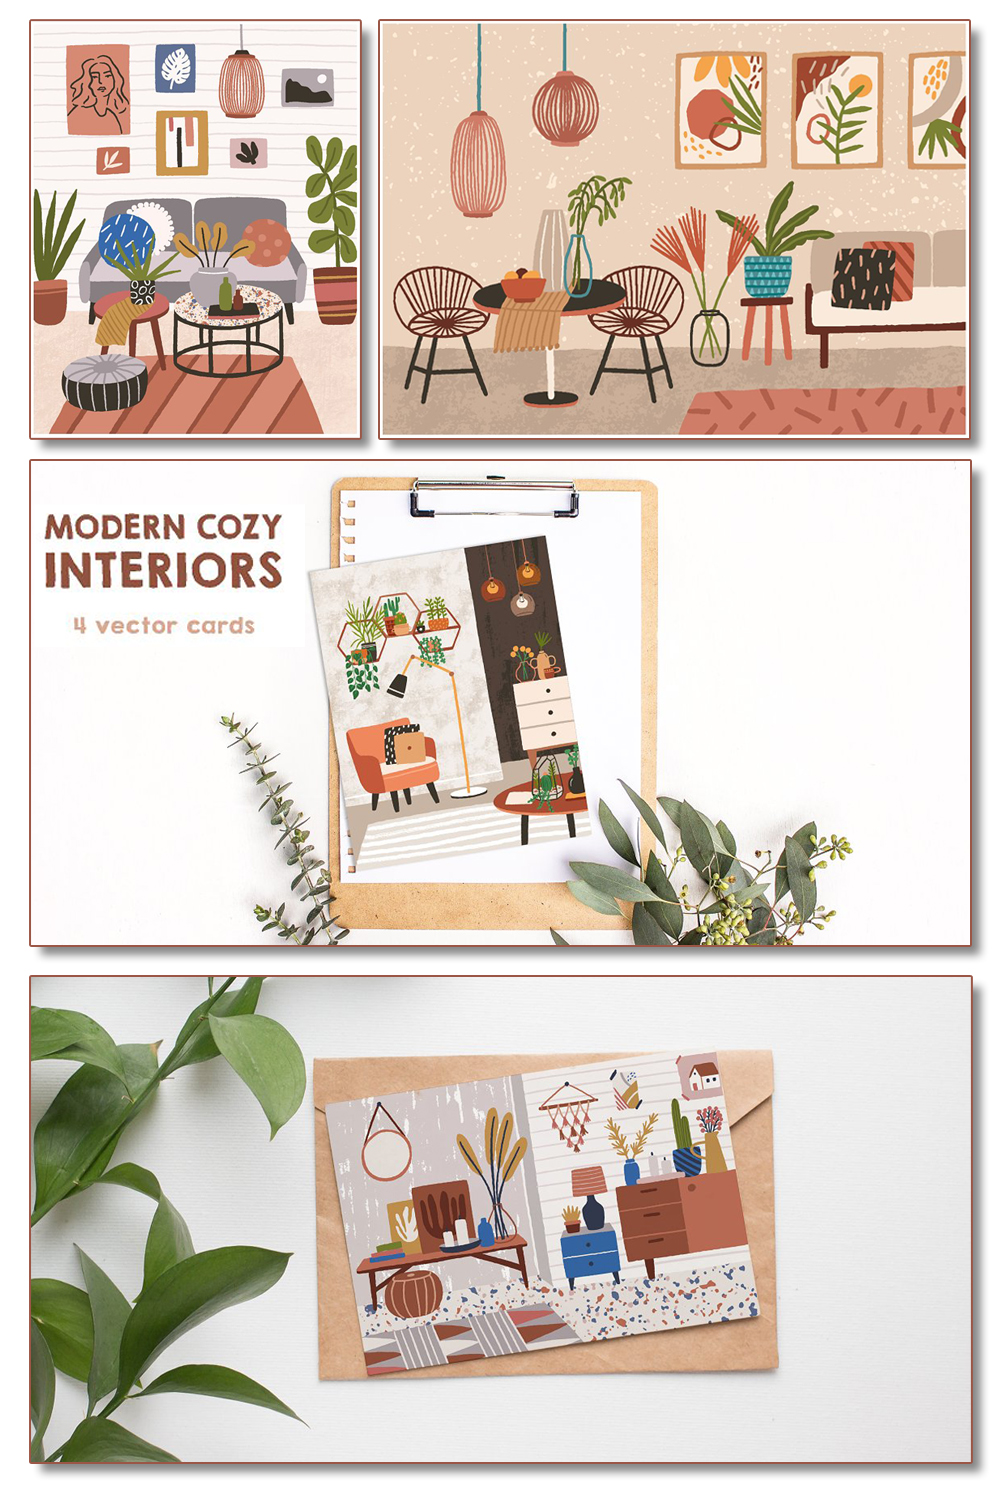 Modern Cozy Interiors pinterest image.